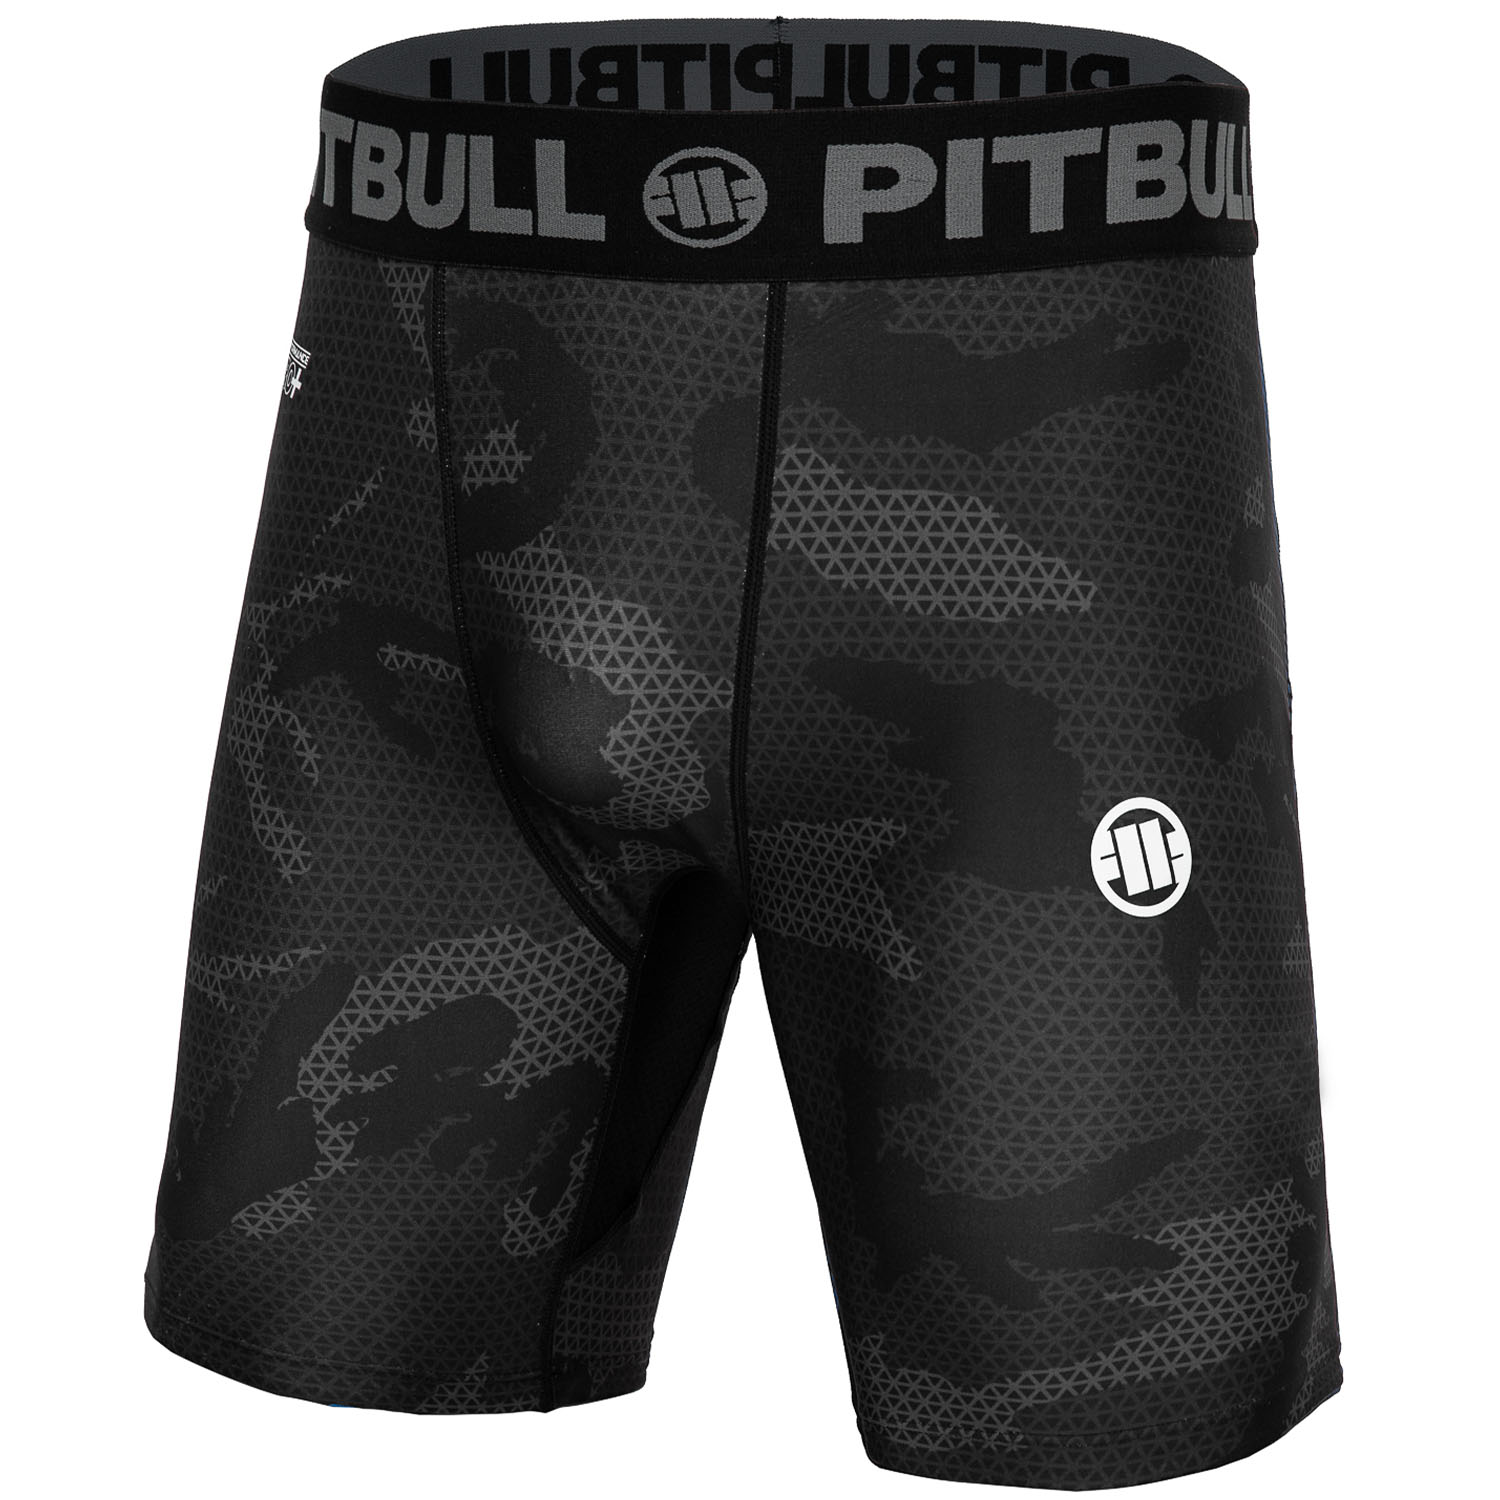 Pit Bull West Coast Compression Shorts, Net-camo 2, schwarz-camo